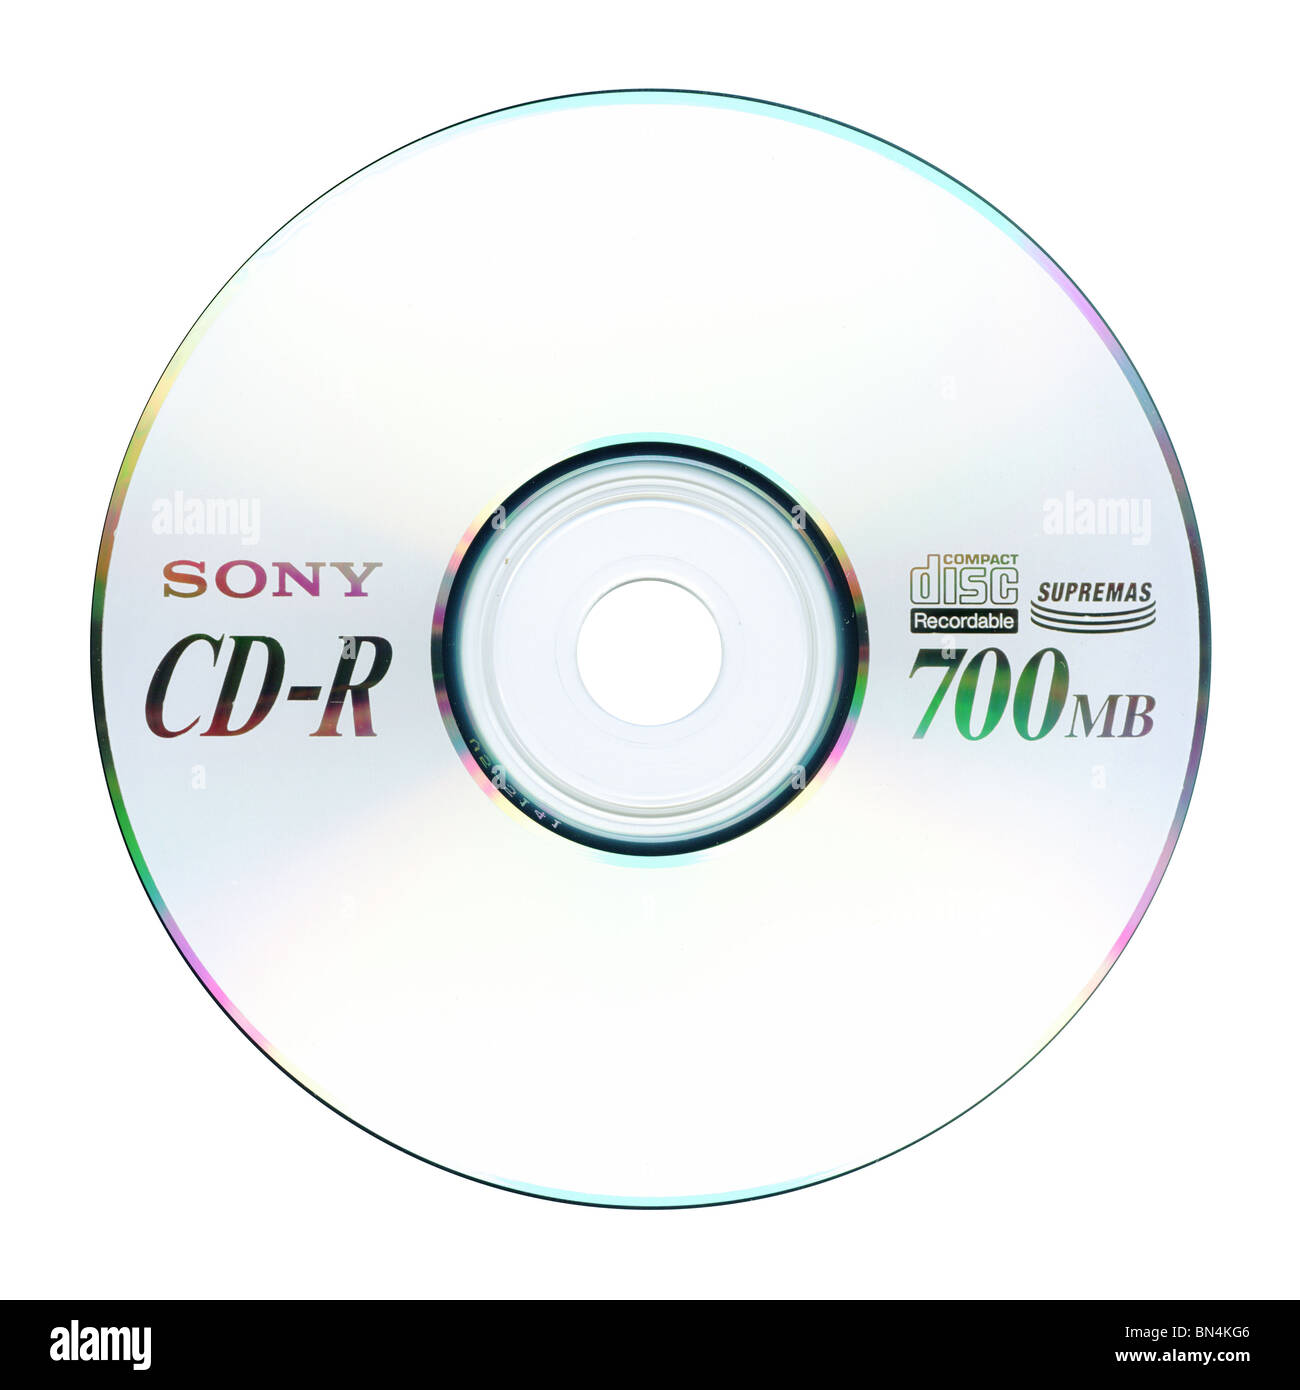 Sony CD-R Acronimo di compact disc 700MB Foto Stock